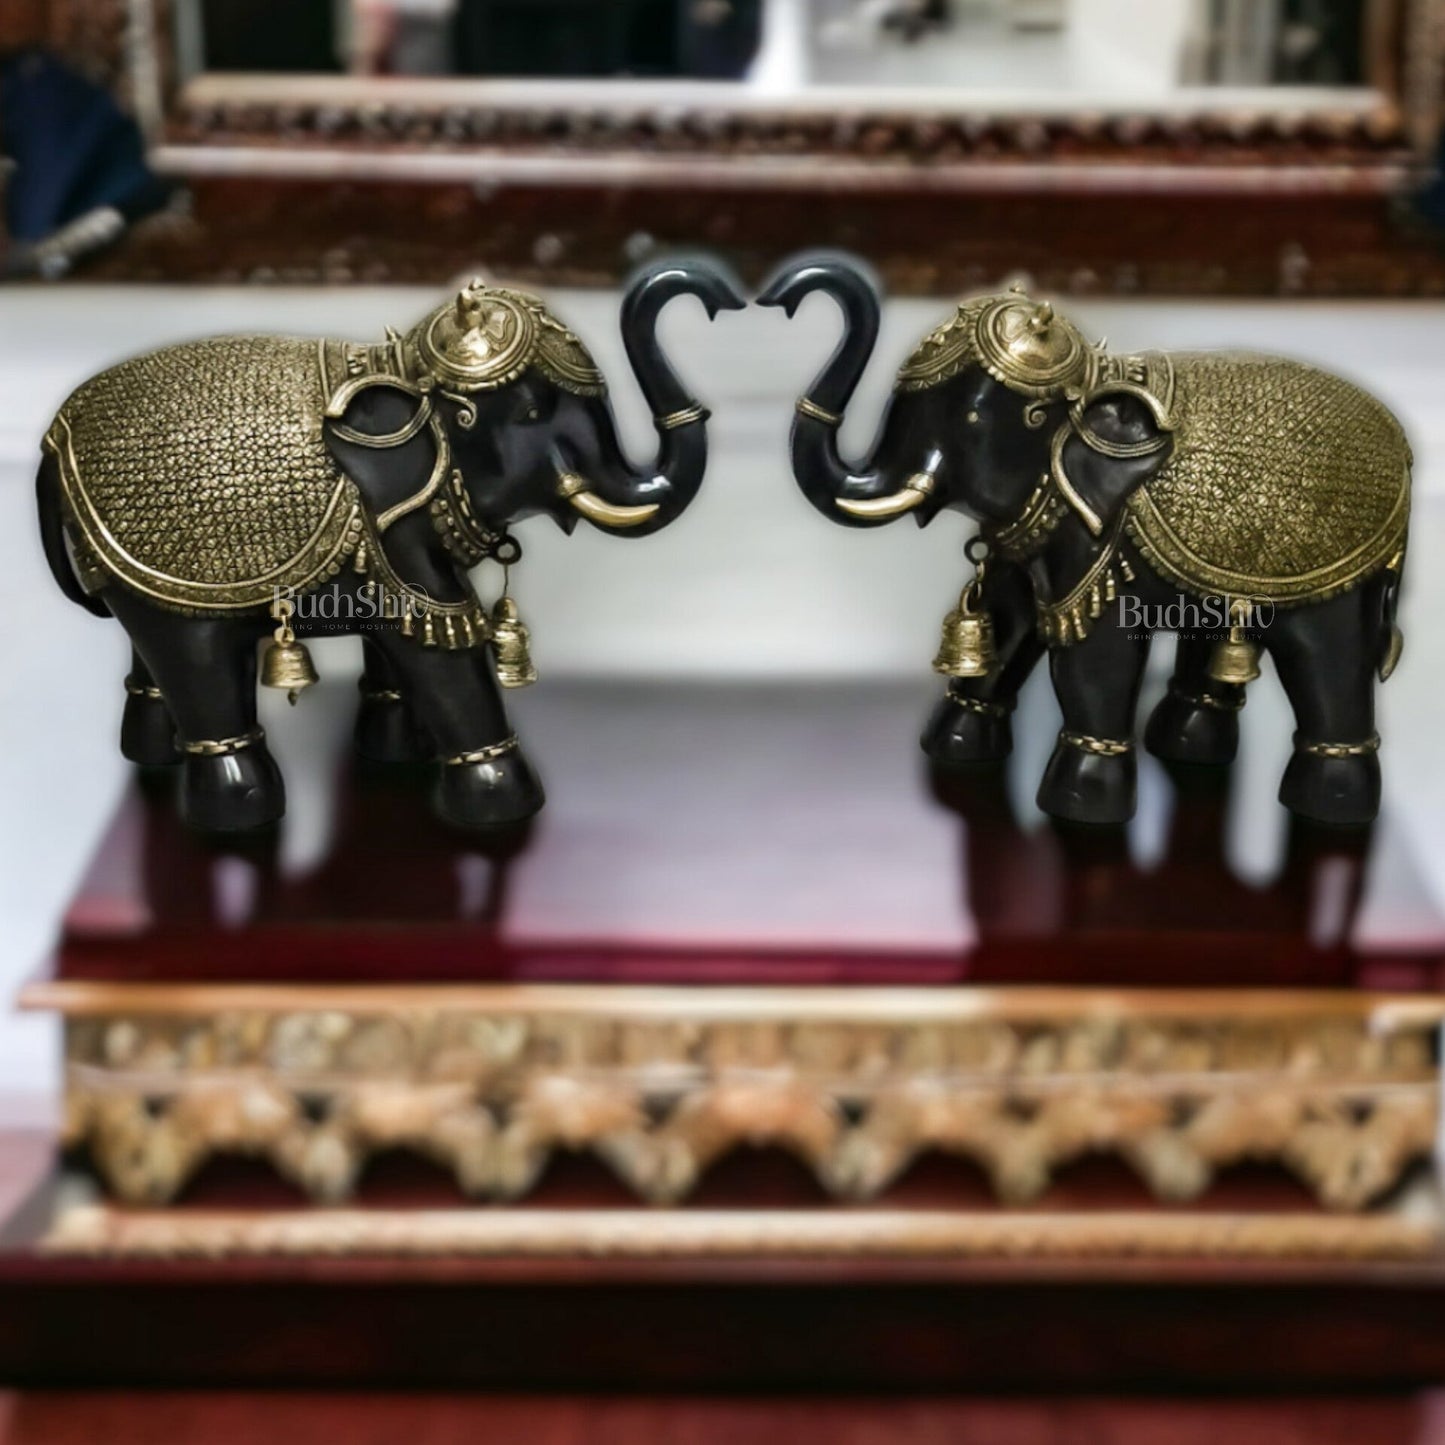 Pair of Large Brass Elephants - 2 Feet Length - Budhshiv.com